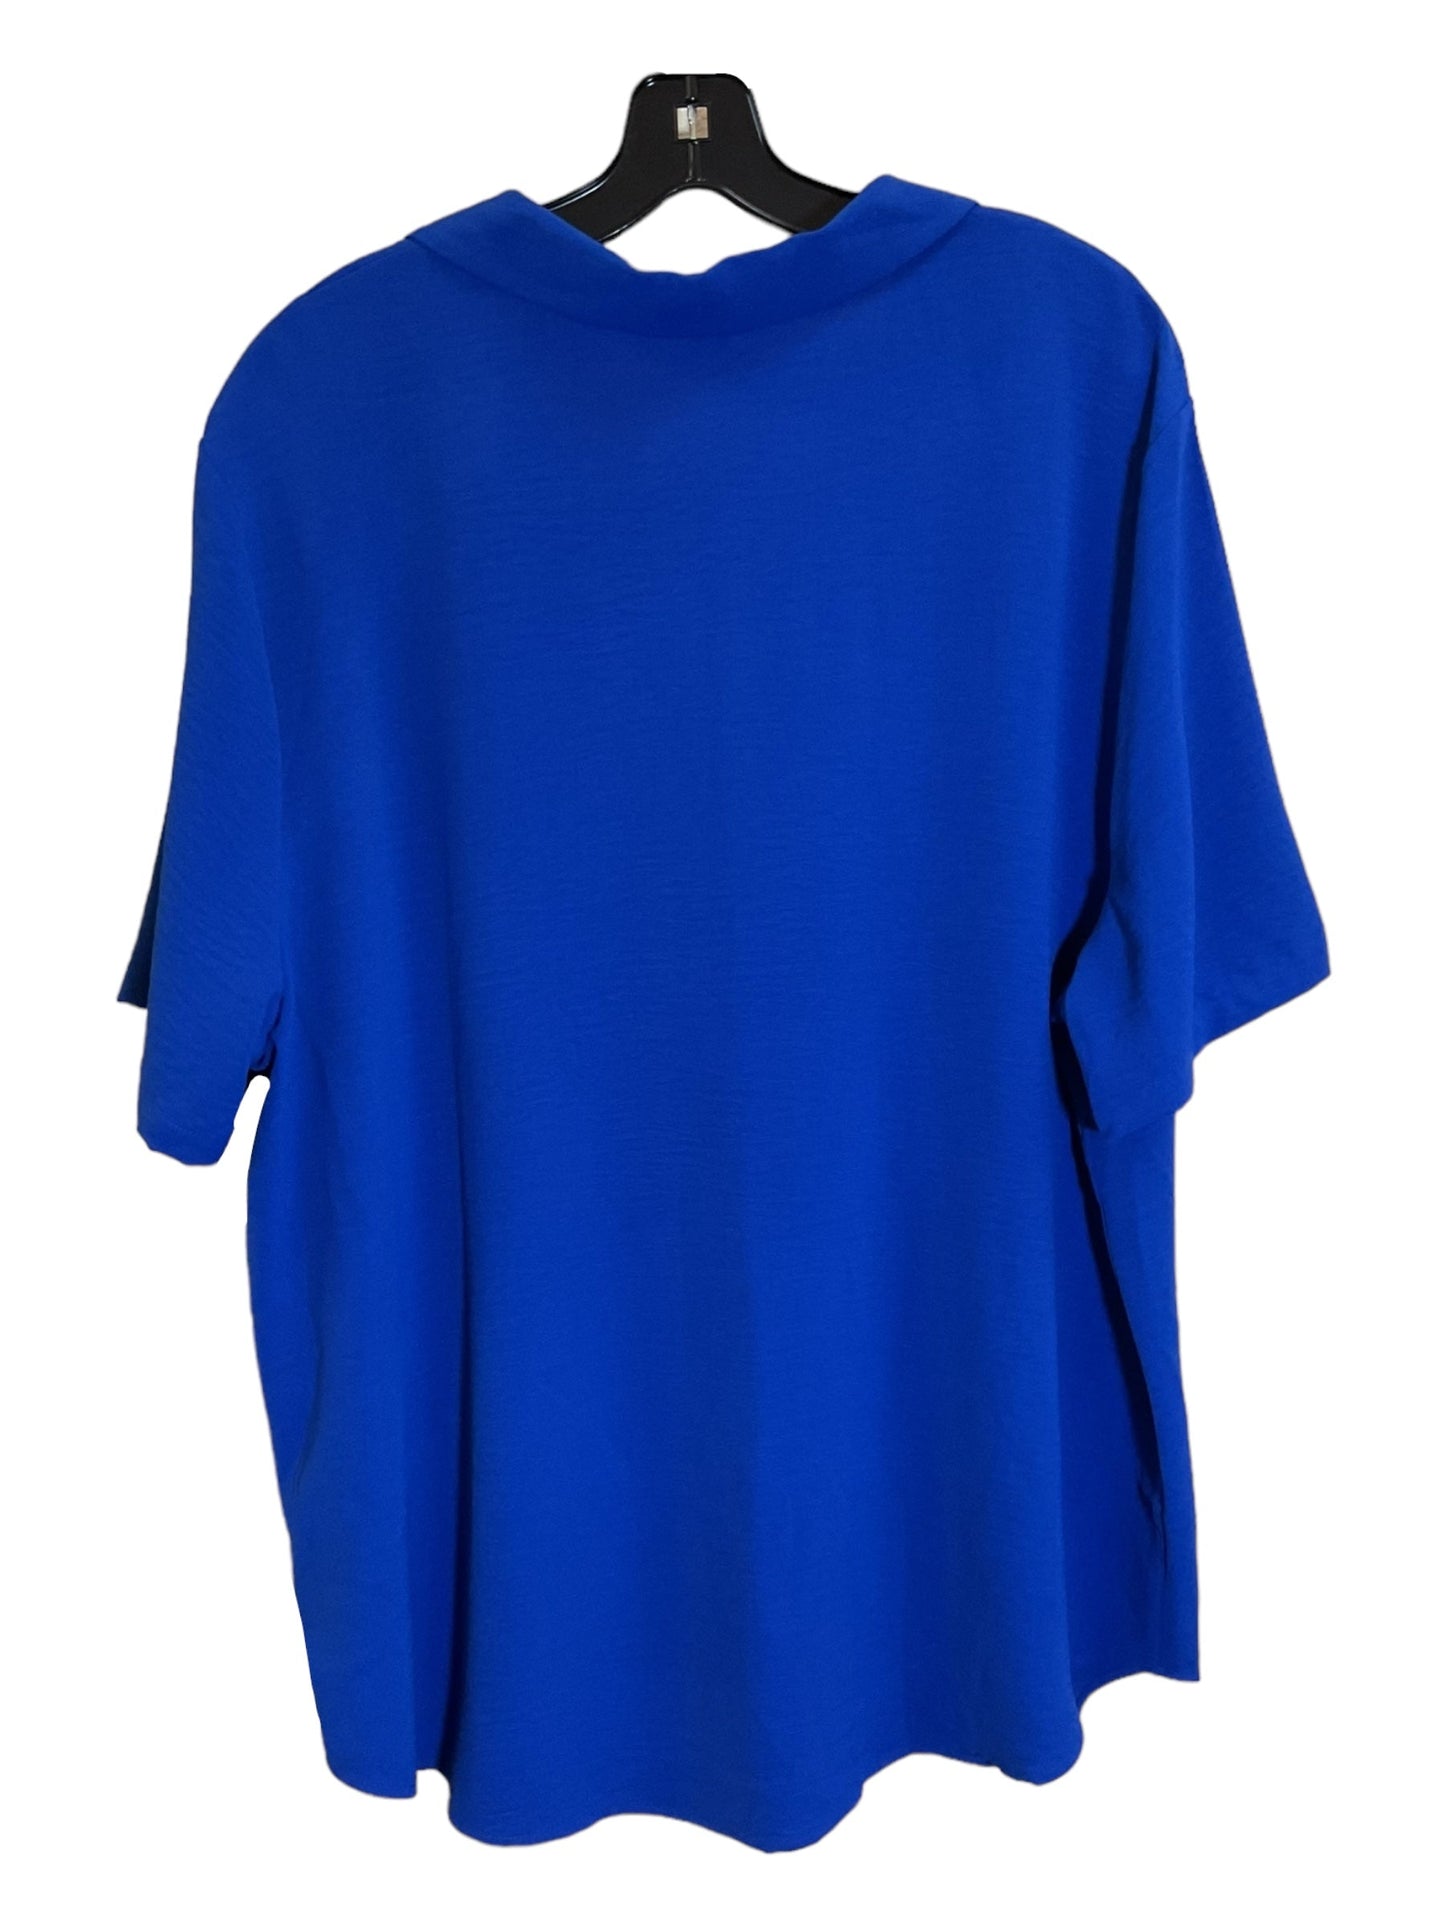 Blue Top Short Sleeve Hilary Radley, Size 1x